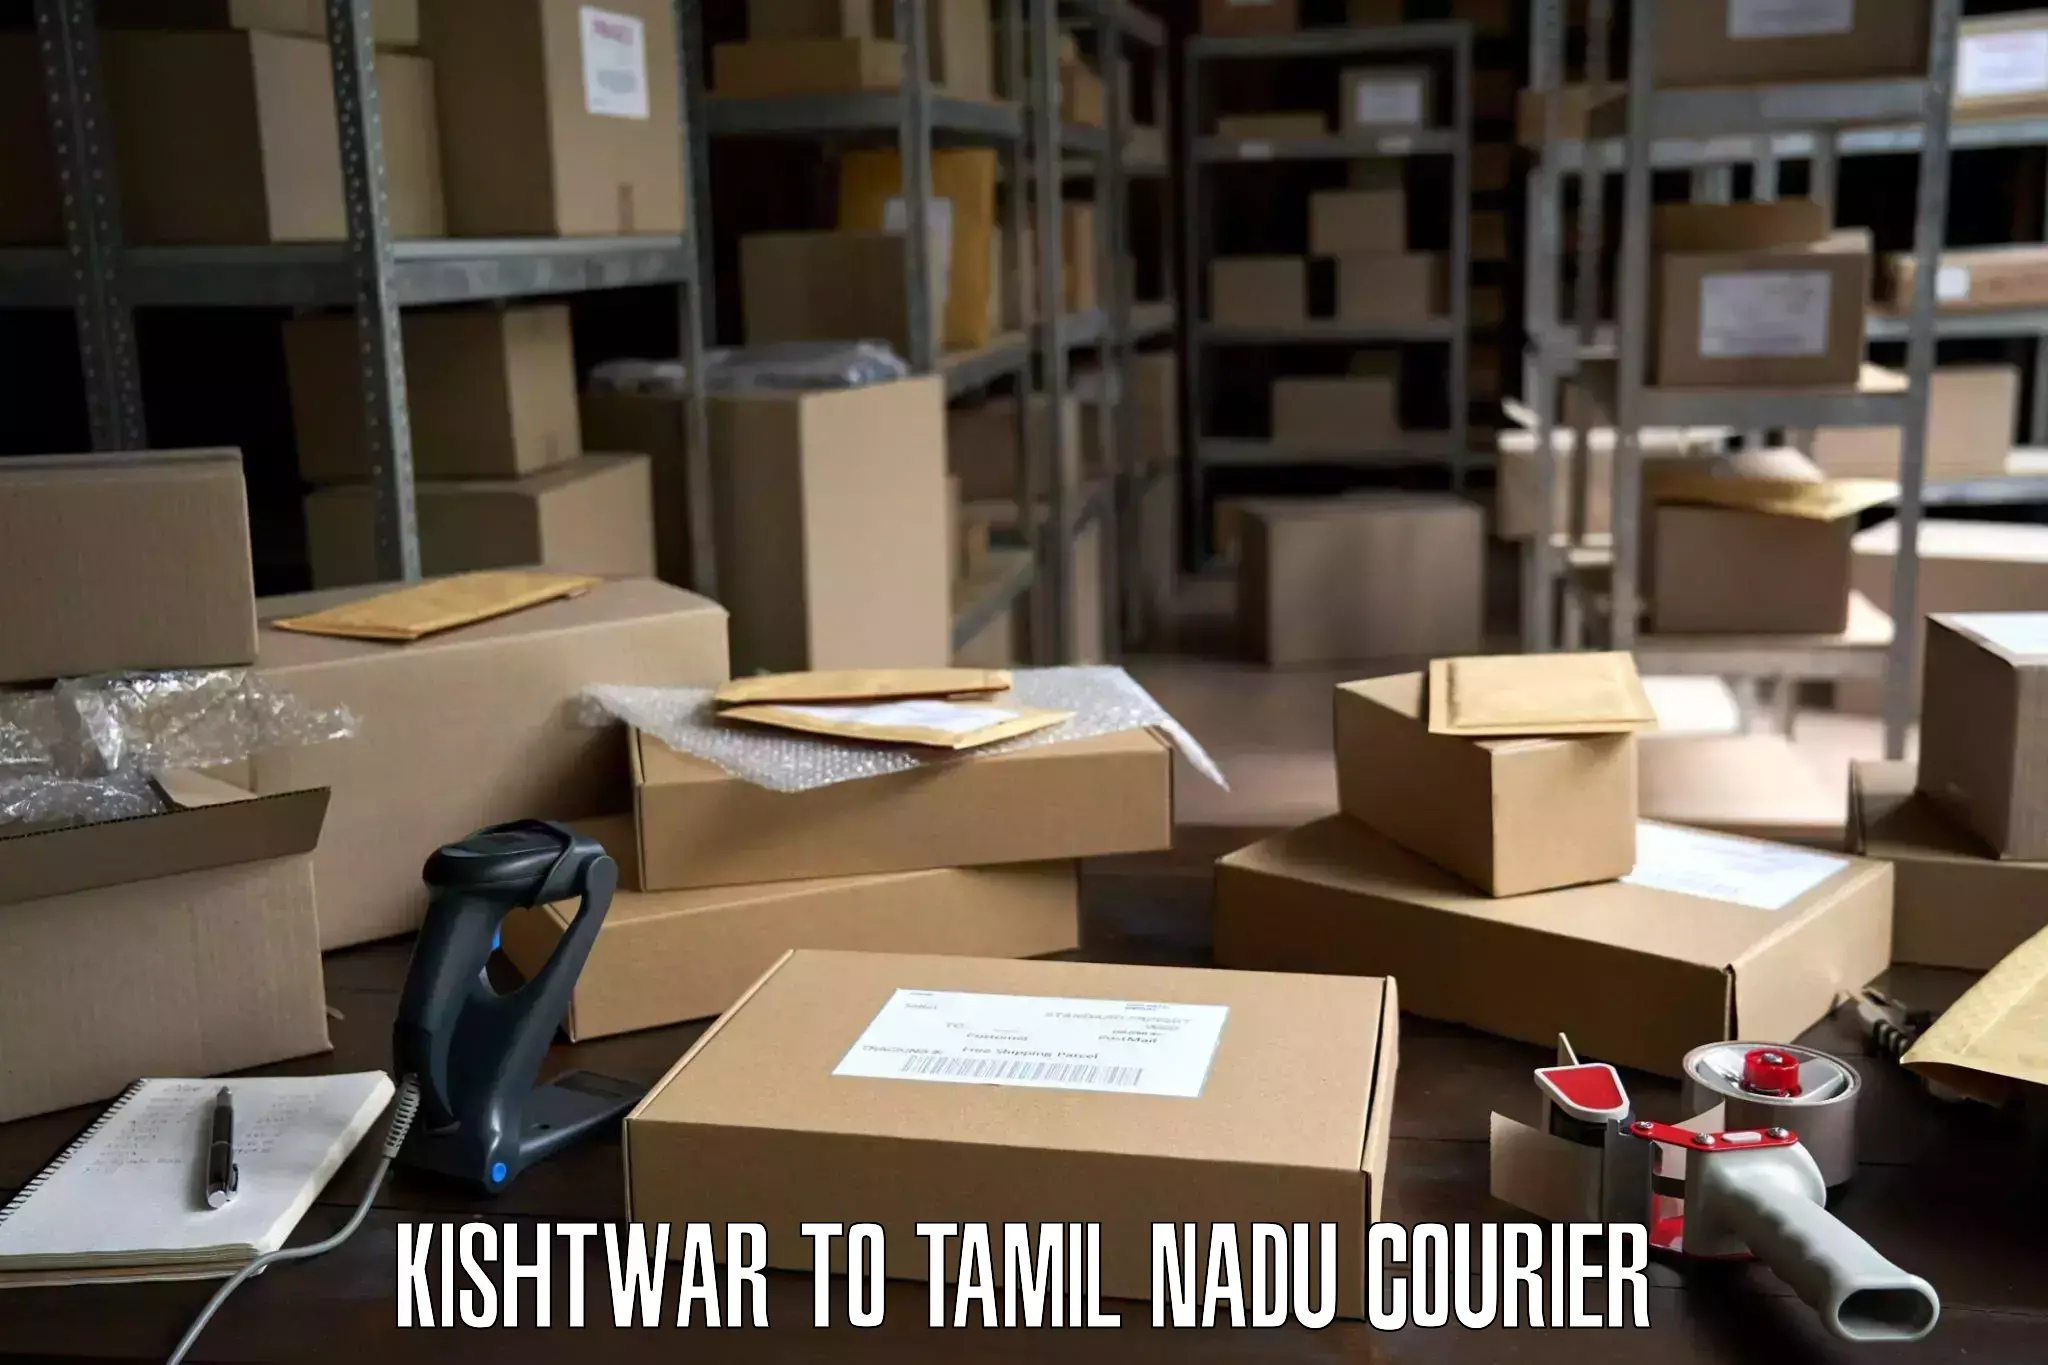 Professional moving company Kishtwar to Coimbatore